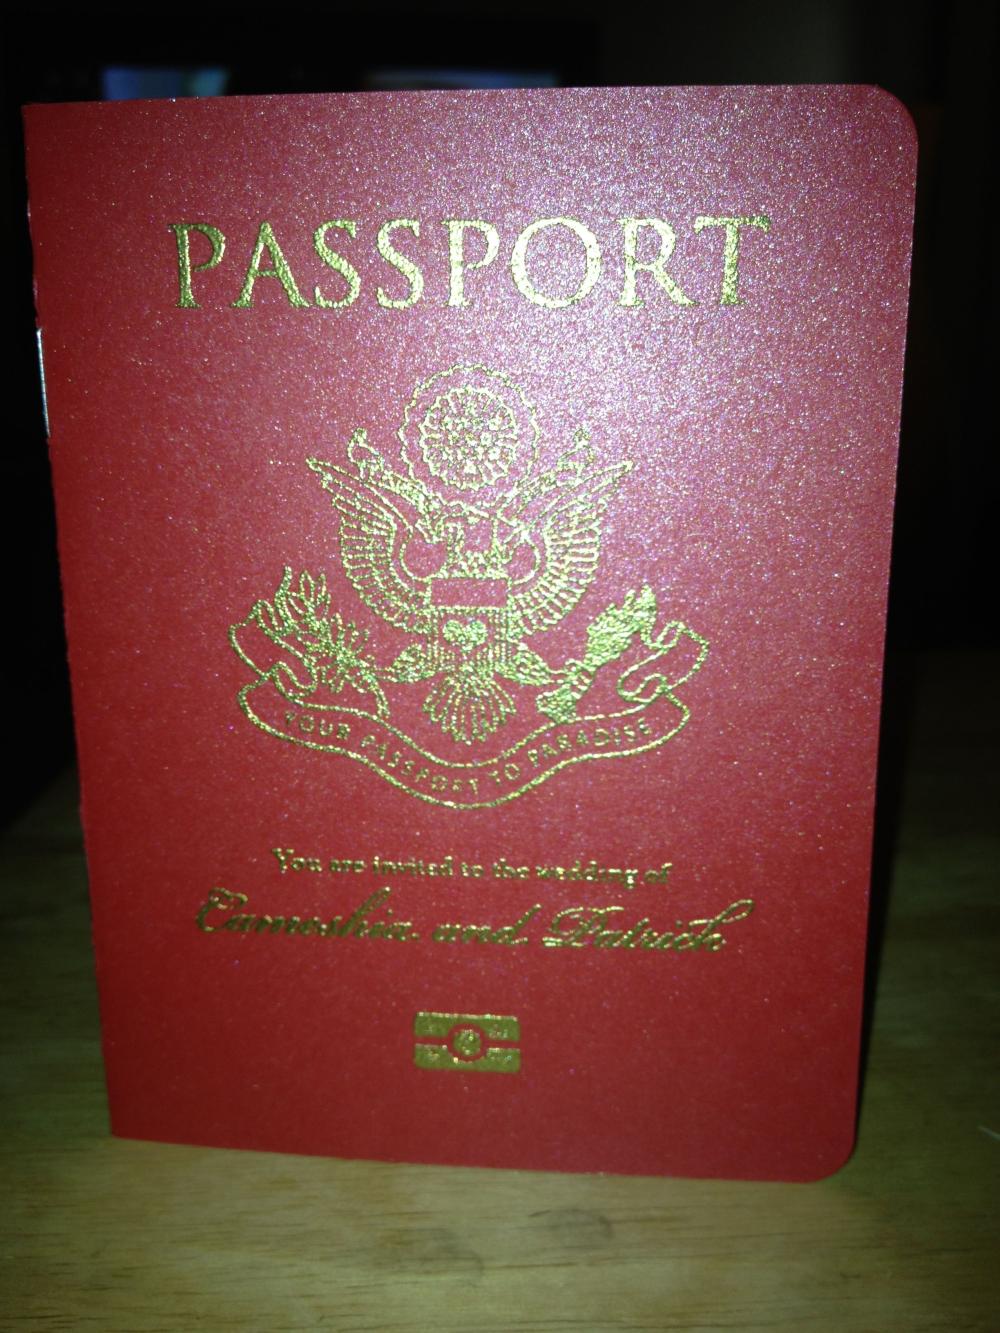 Passport Invitations by April Twenty Five